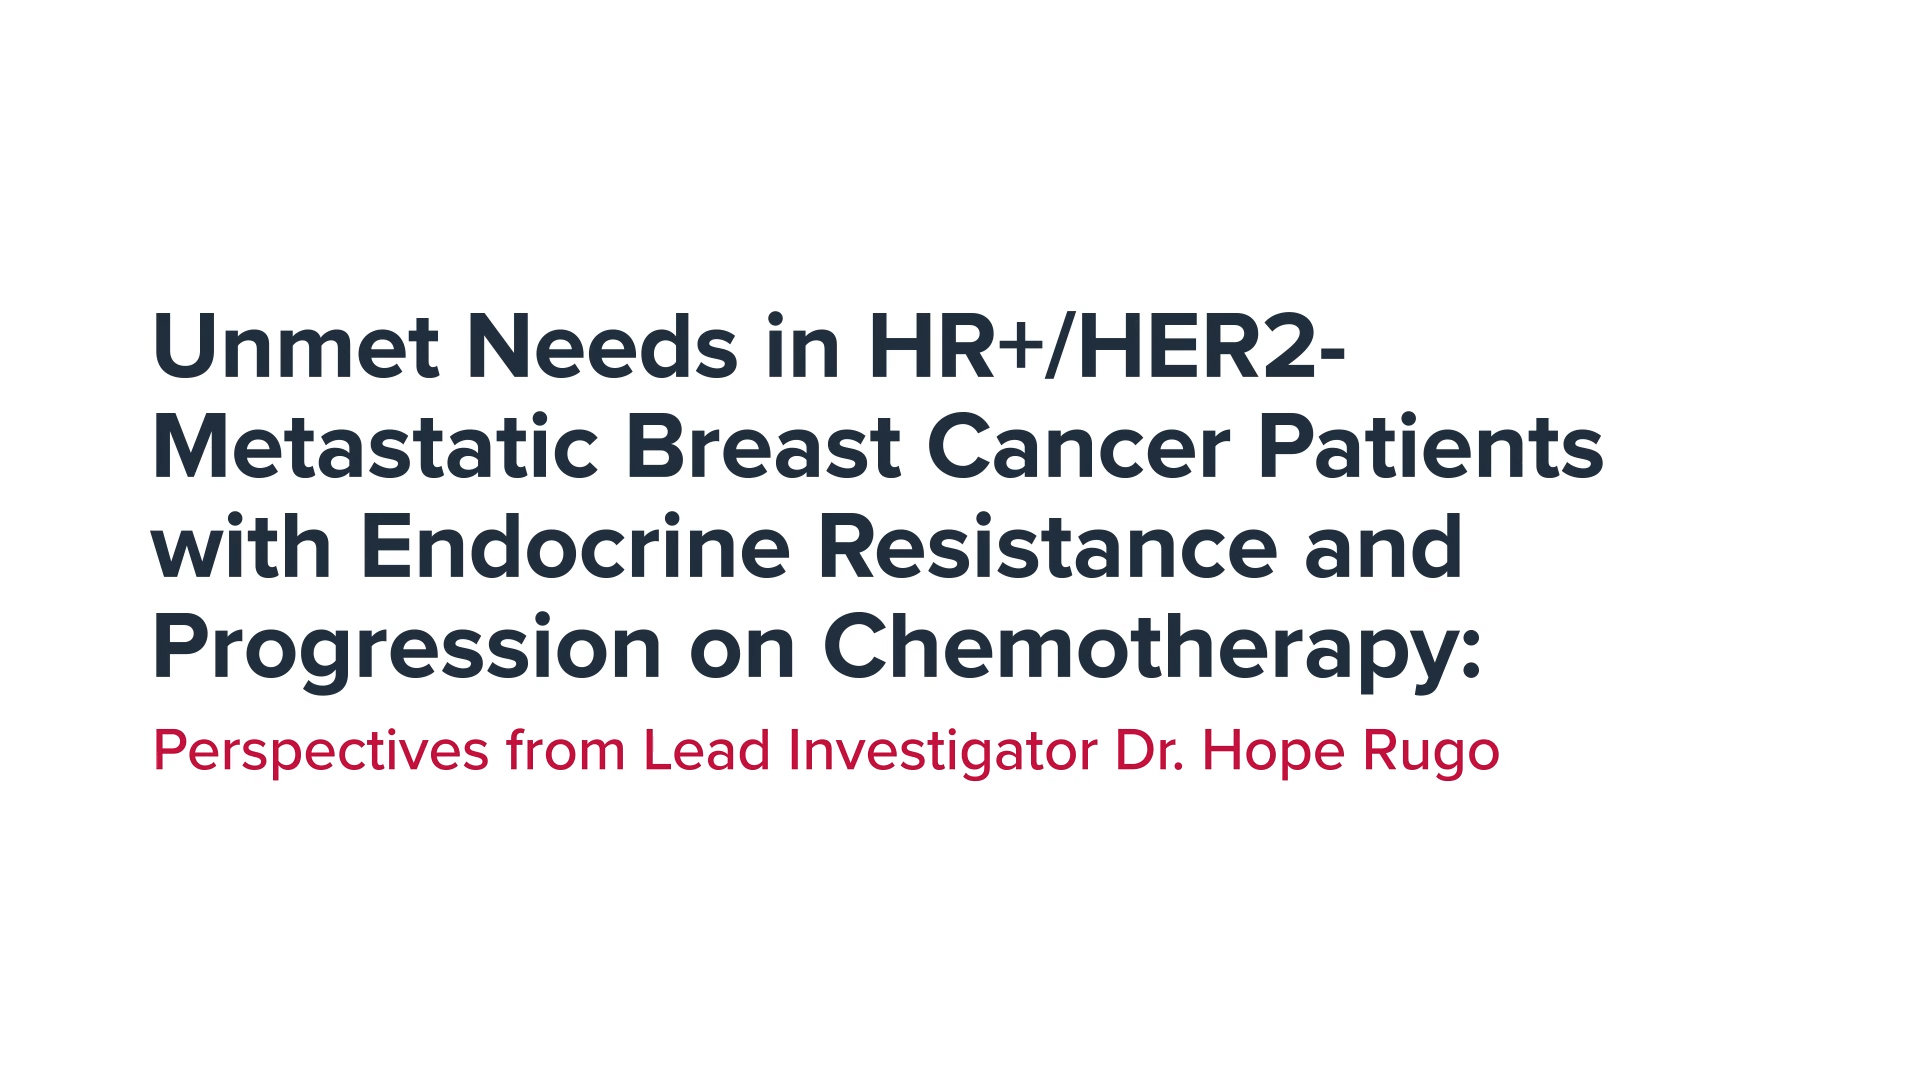 Dr. Hope Rugo discusses unmet needs and endocrine resistance in HR+/HER2- metastatic breast cancer